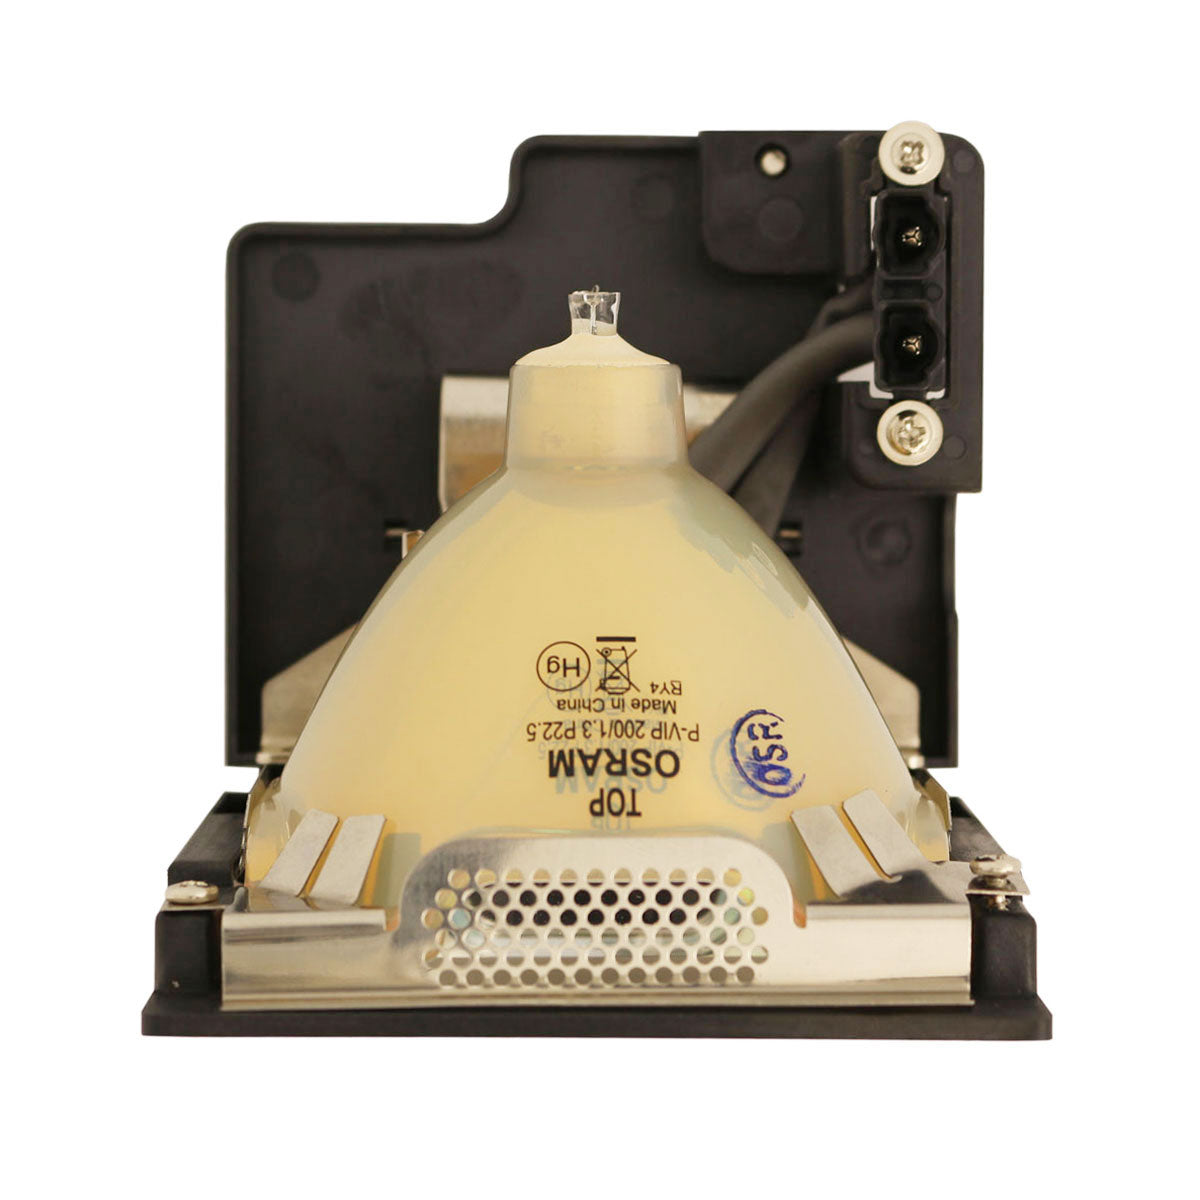 Sanyo POA-LMP39 Osram Projector Lamp Module